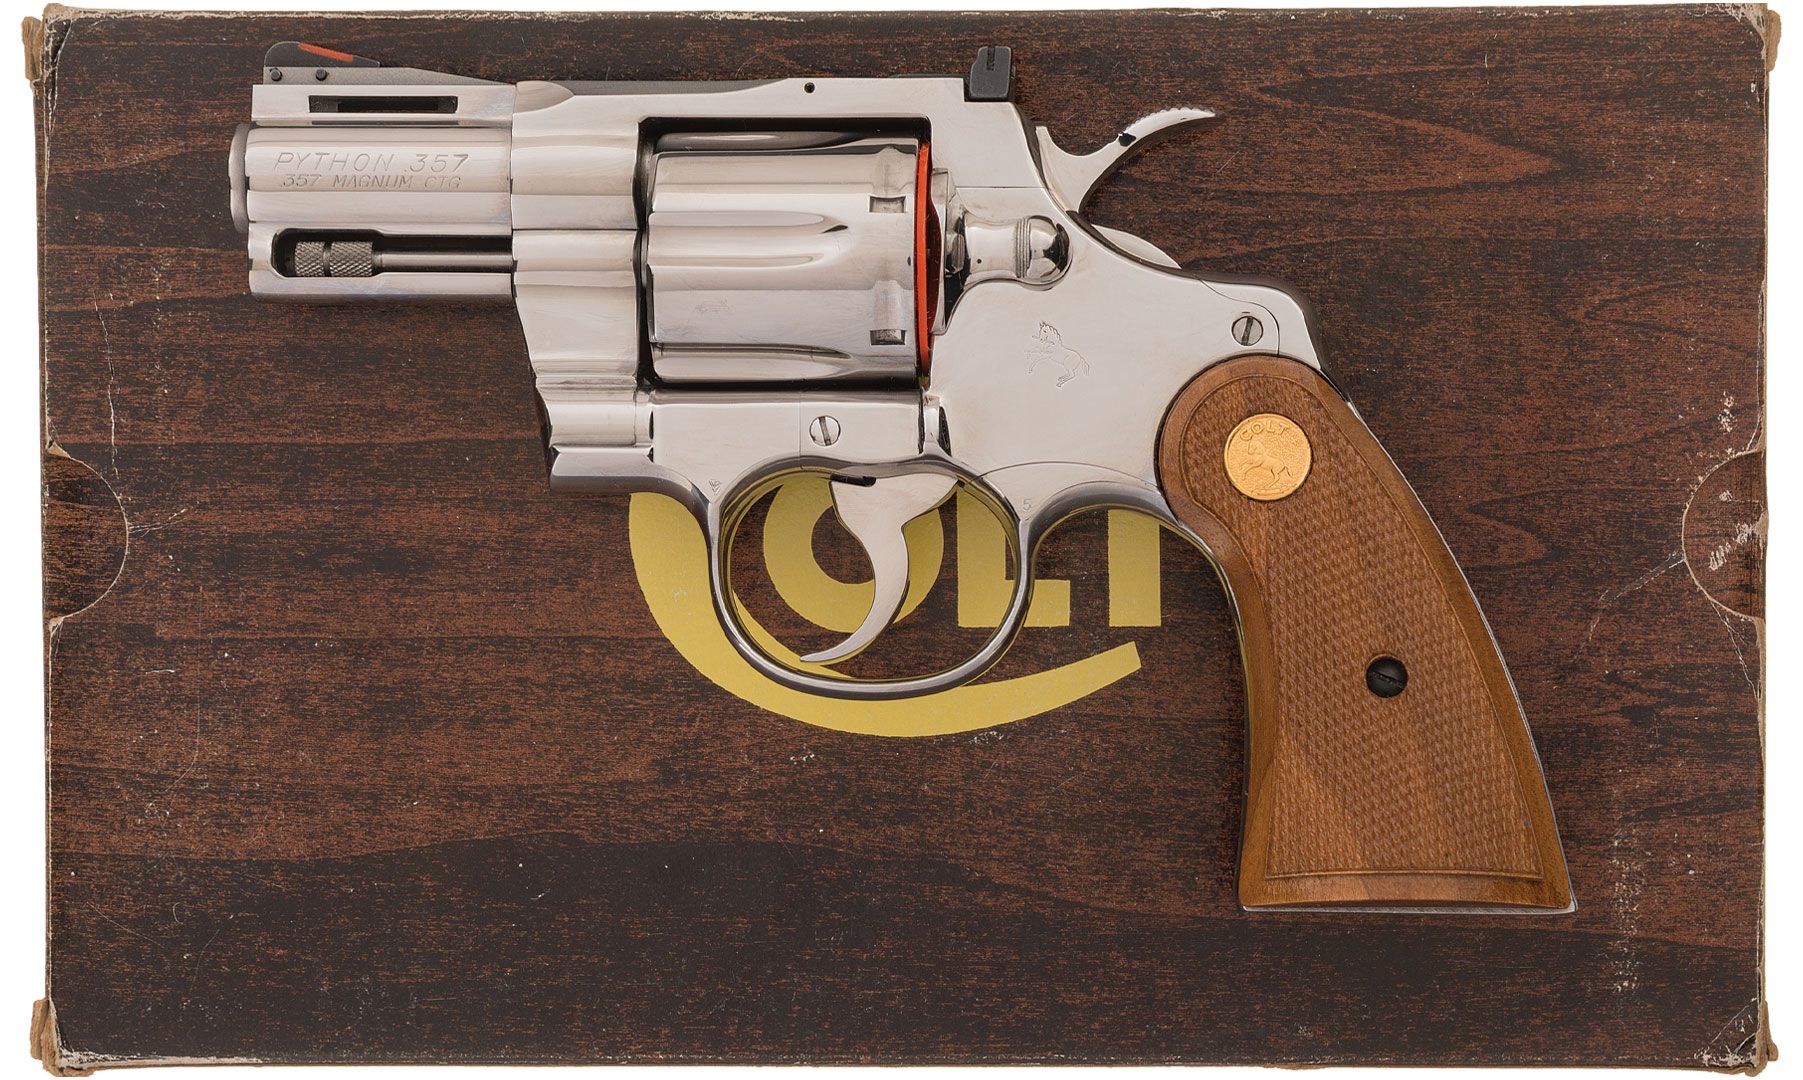 Stainless Colt Python with 2 1/2 Inch Barrel December 2020 Gun Auction